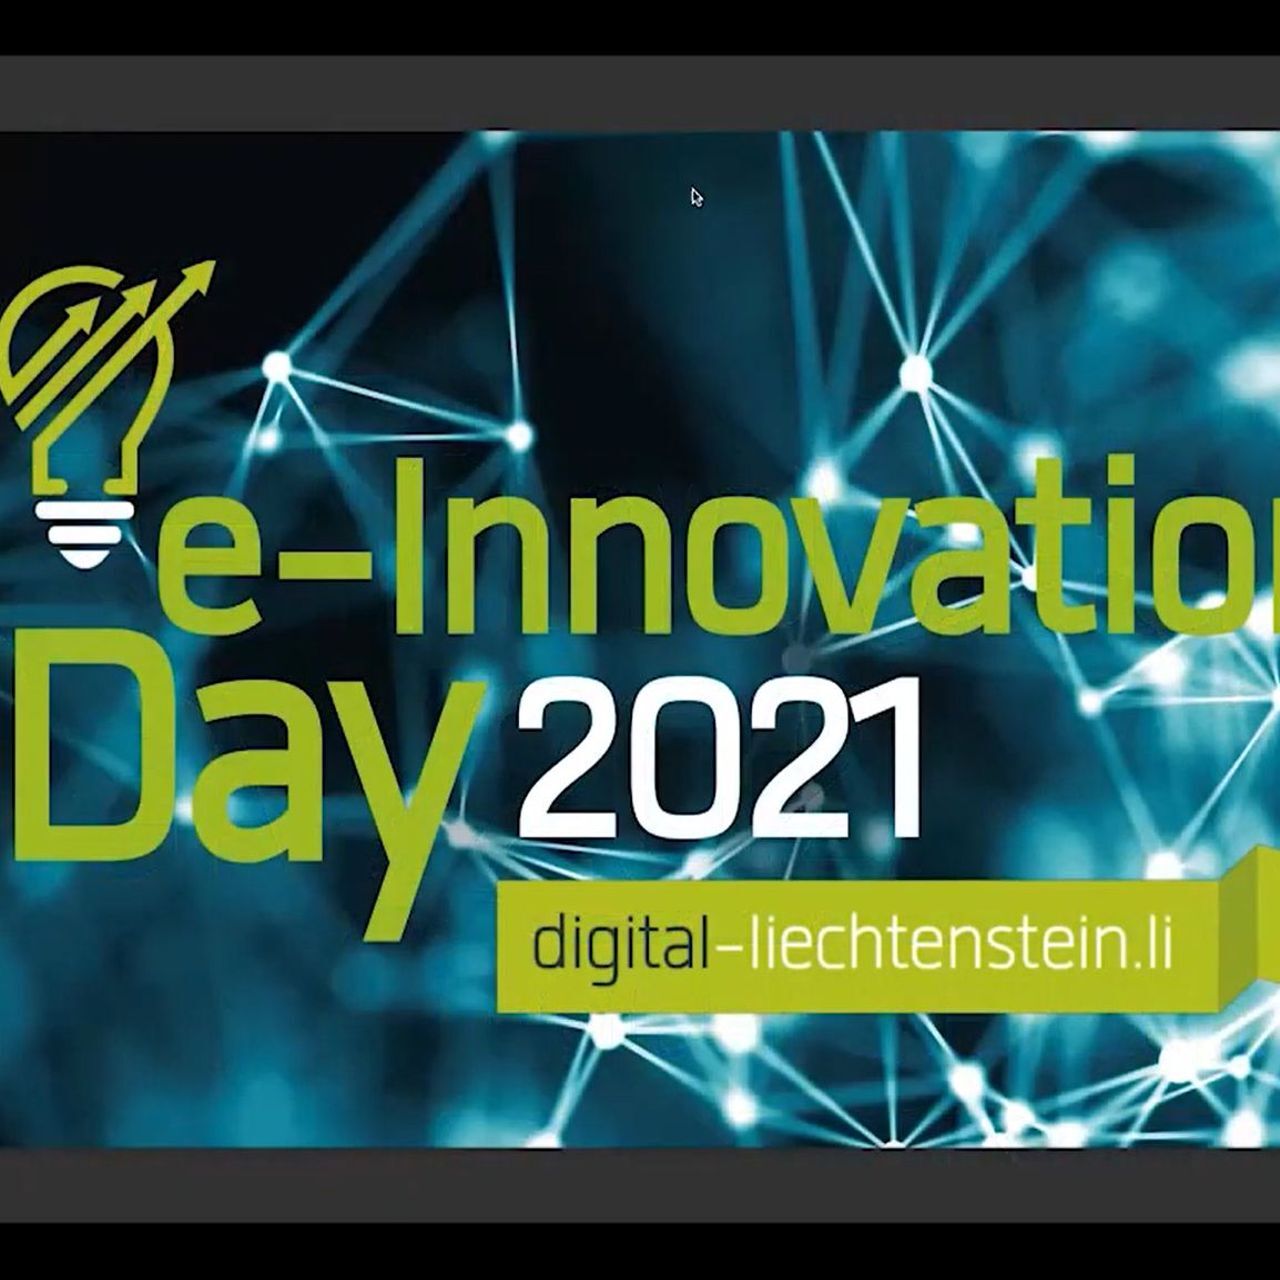 e-Innovation Day: 웨비나 'e-Innovation' Liechtenstein 2021의 초기 프레임